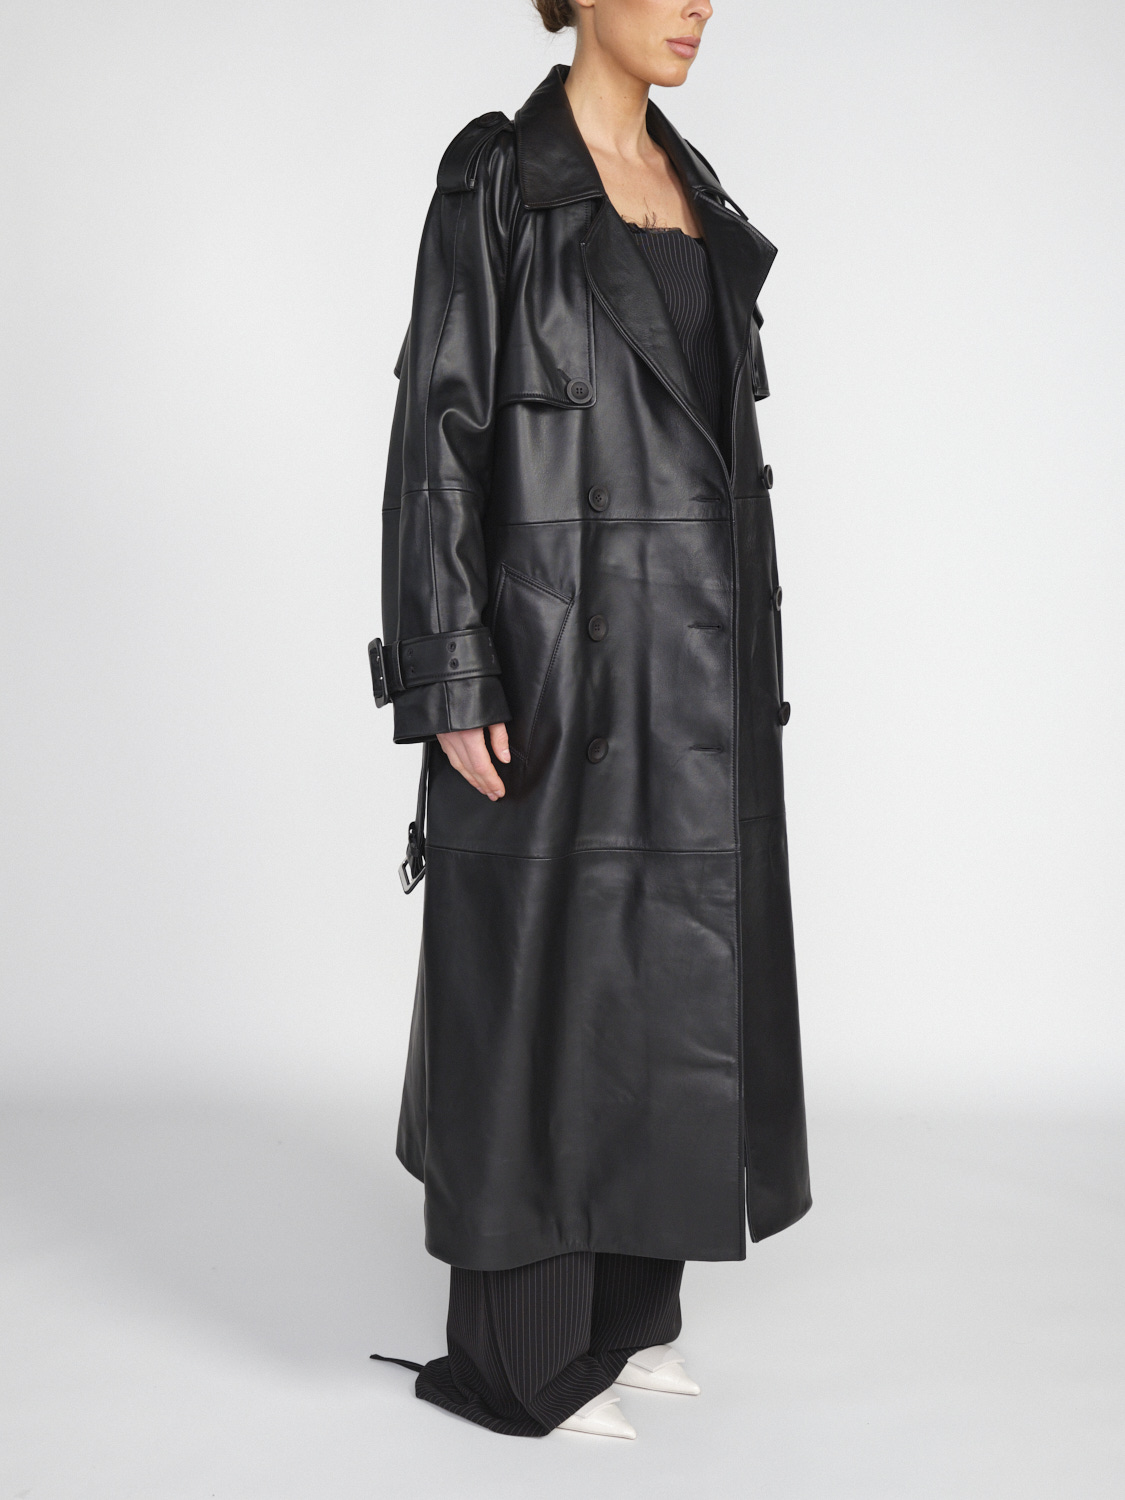 Arma Toledo – Oversized leather coat with tie belt  black 36